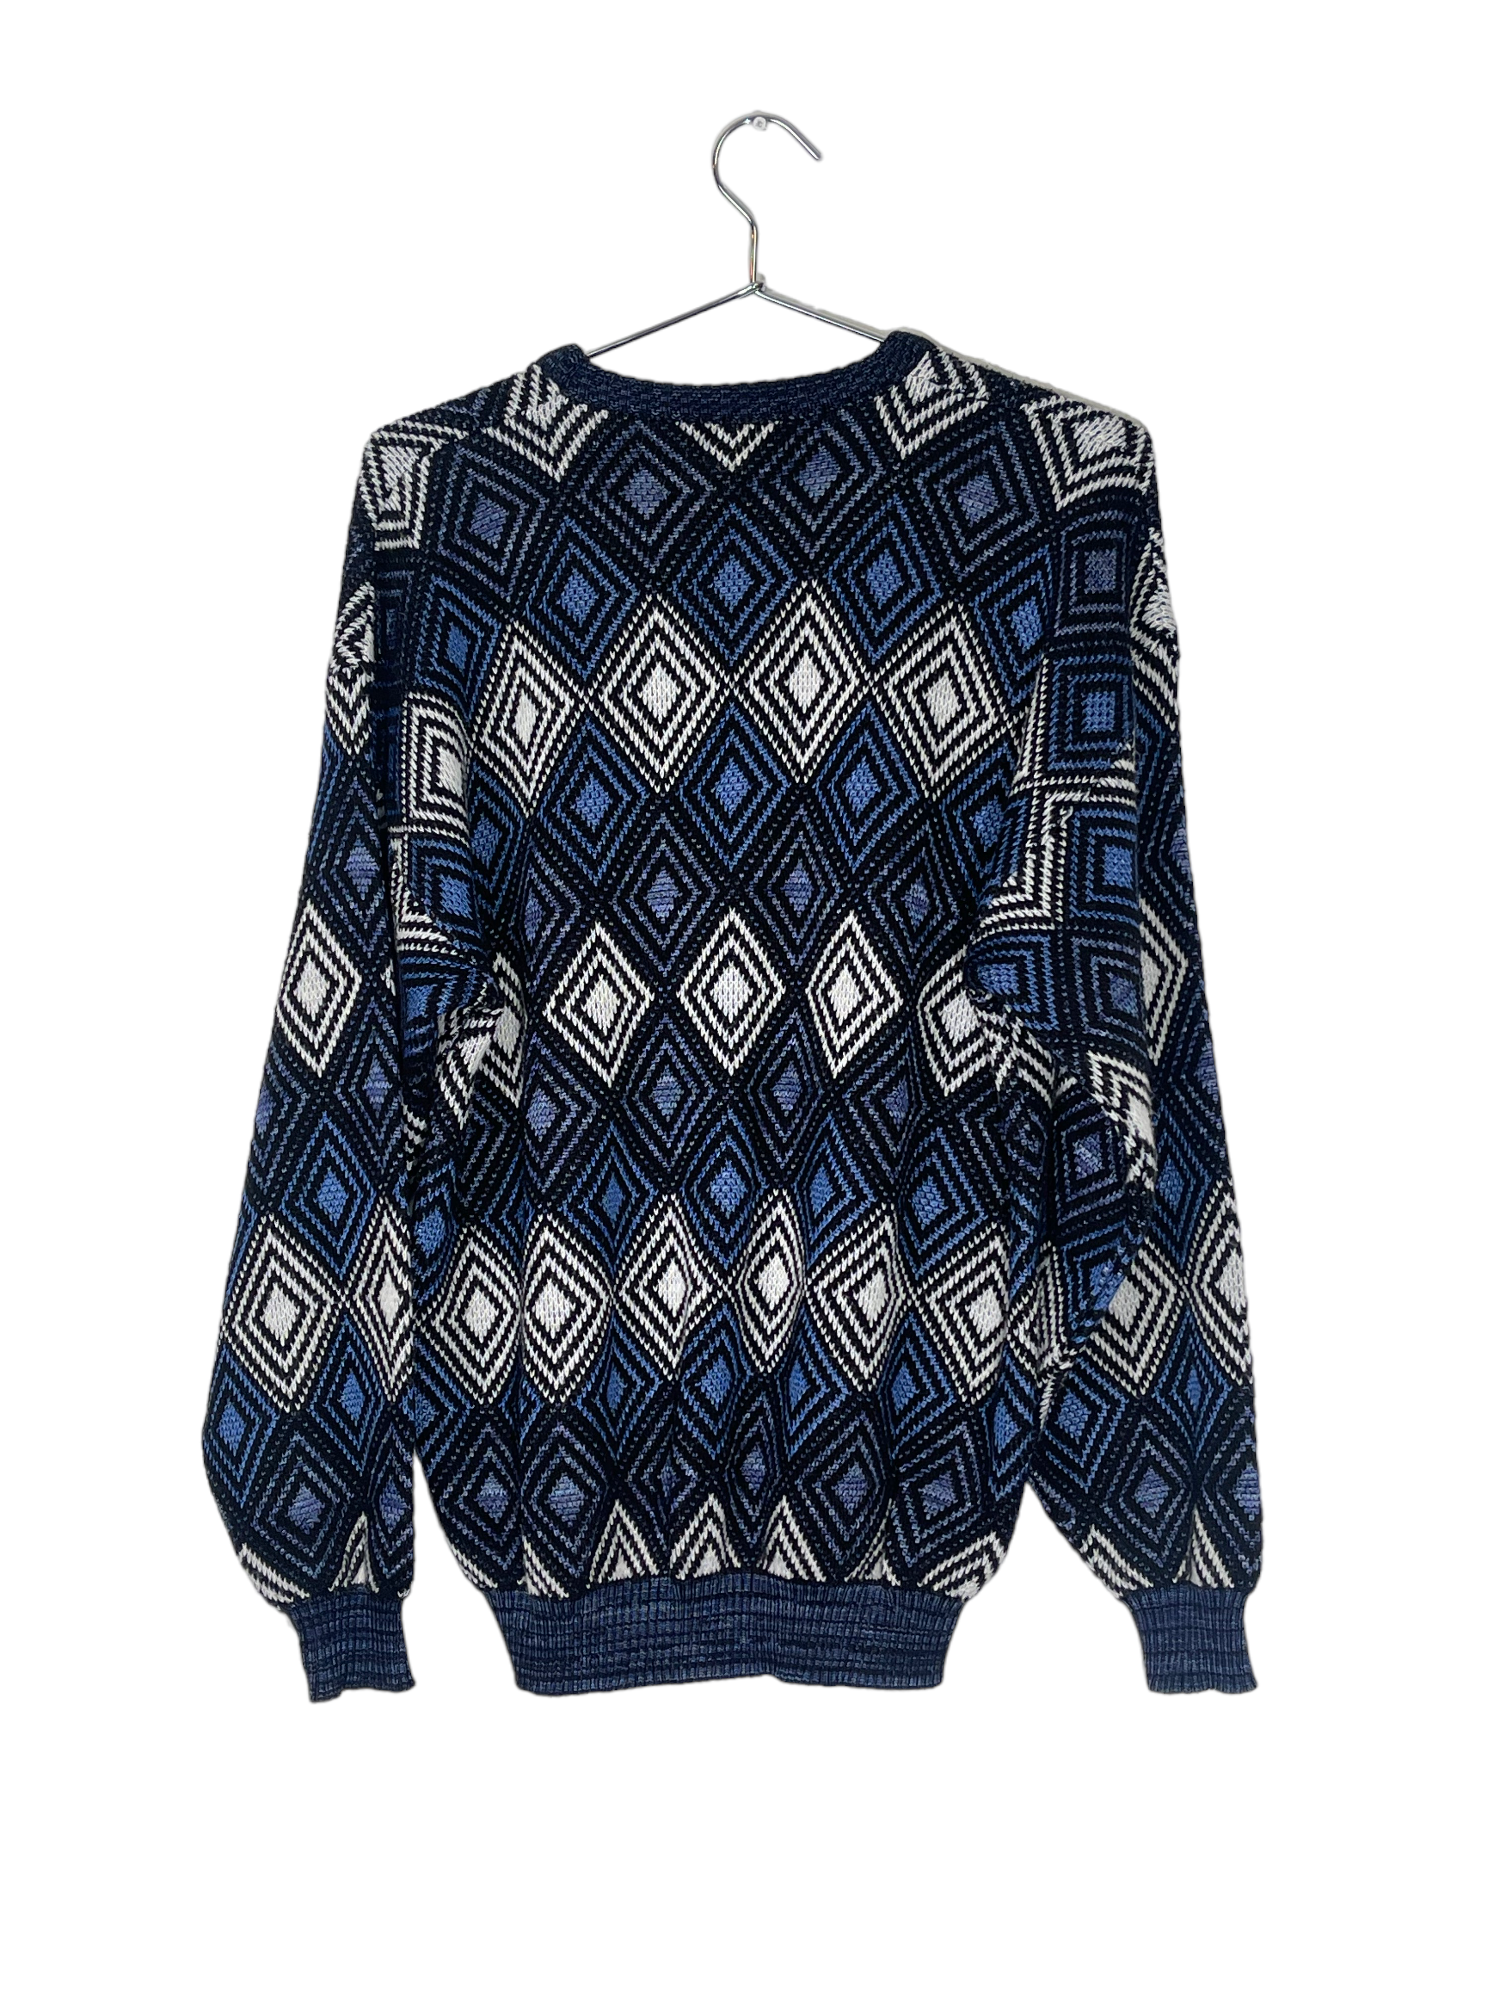 White & Blue Geometrical Pattern Sweater